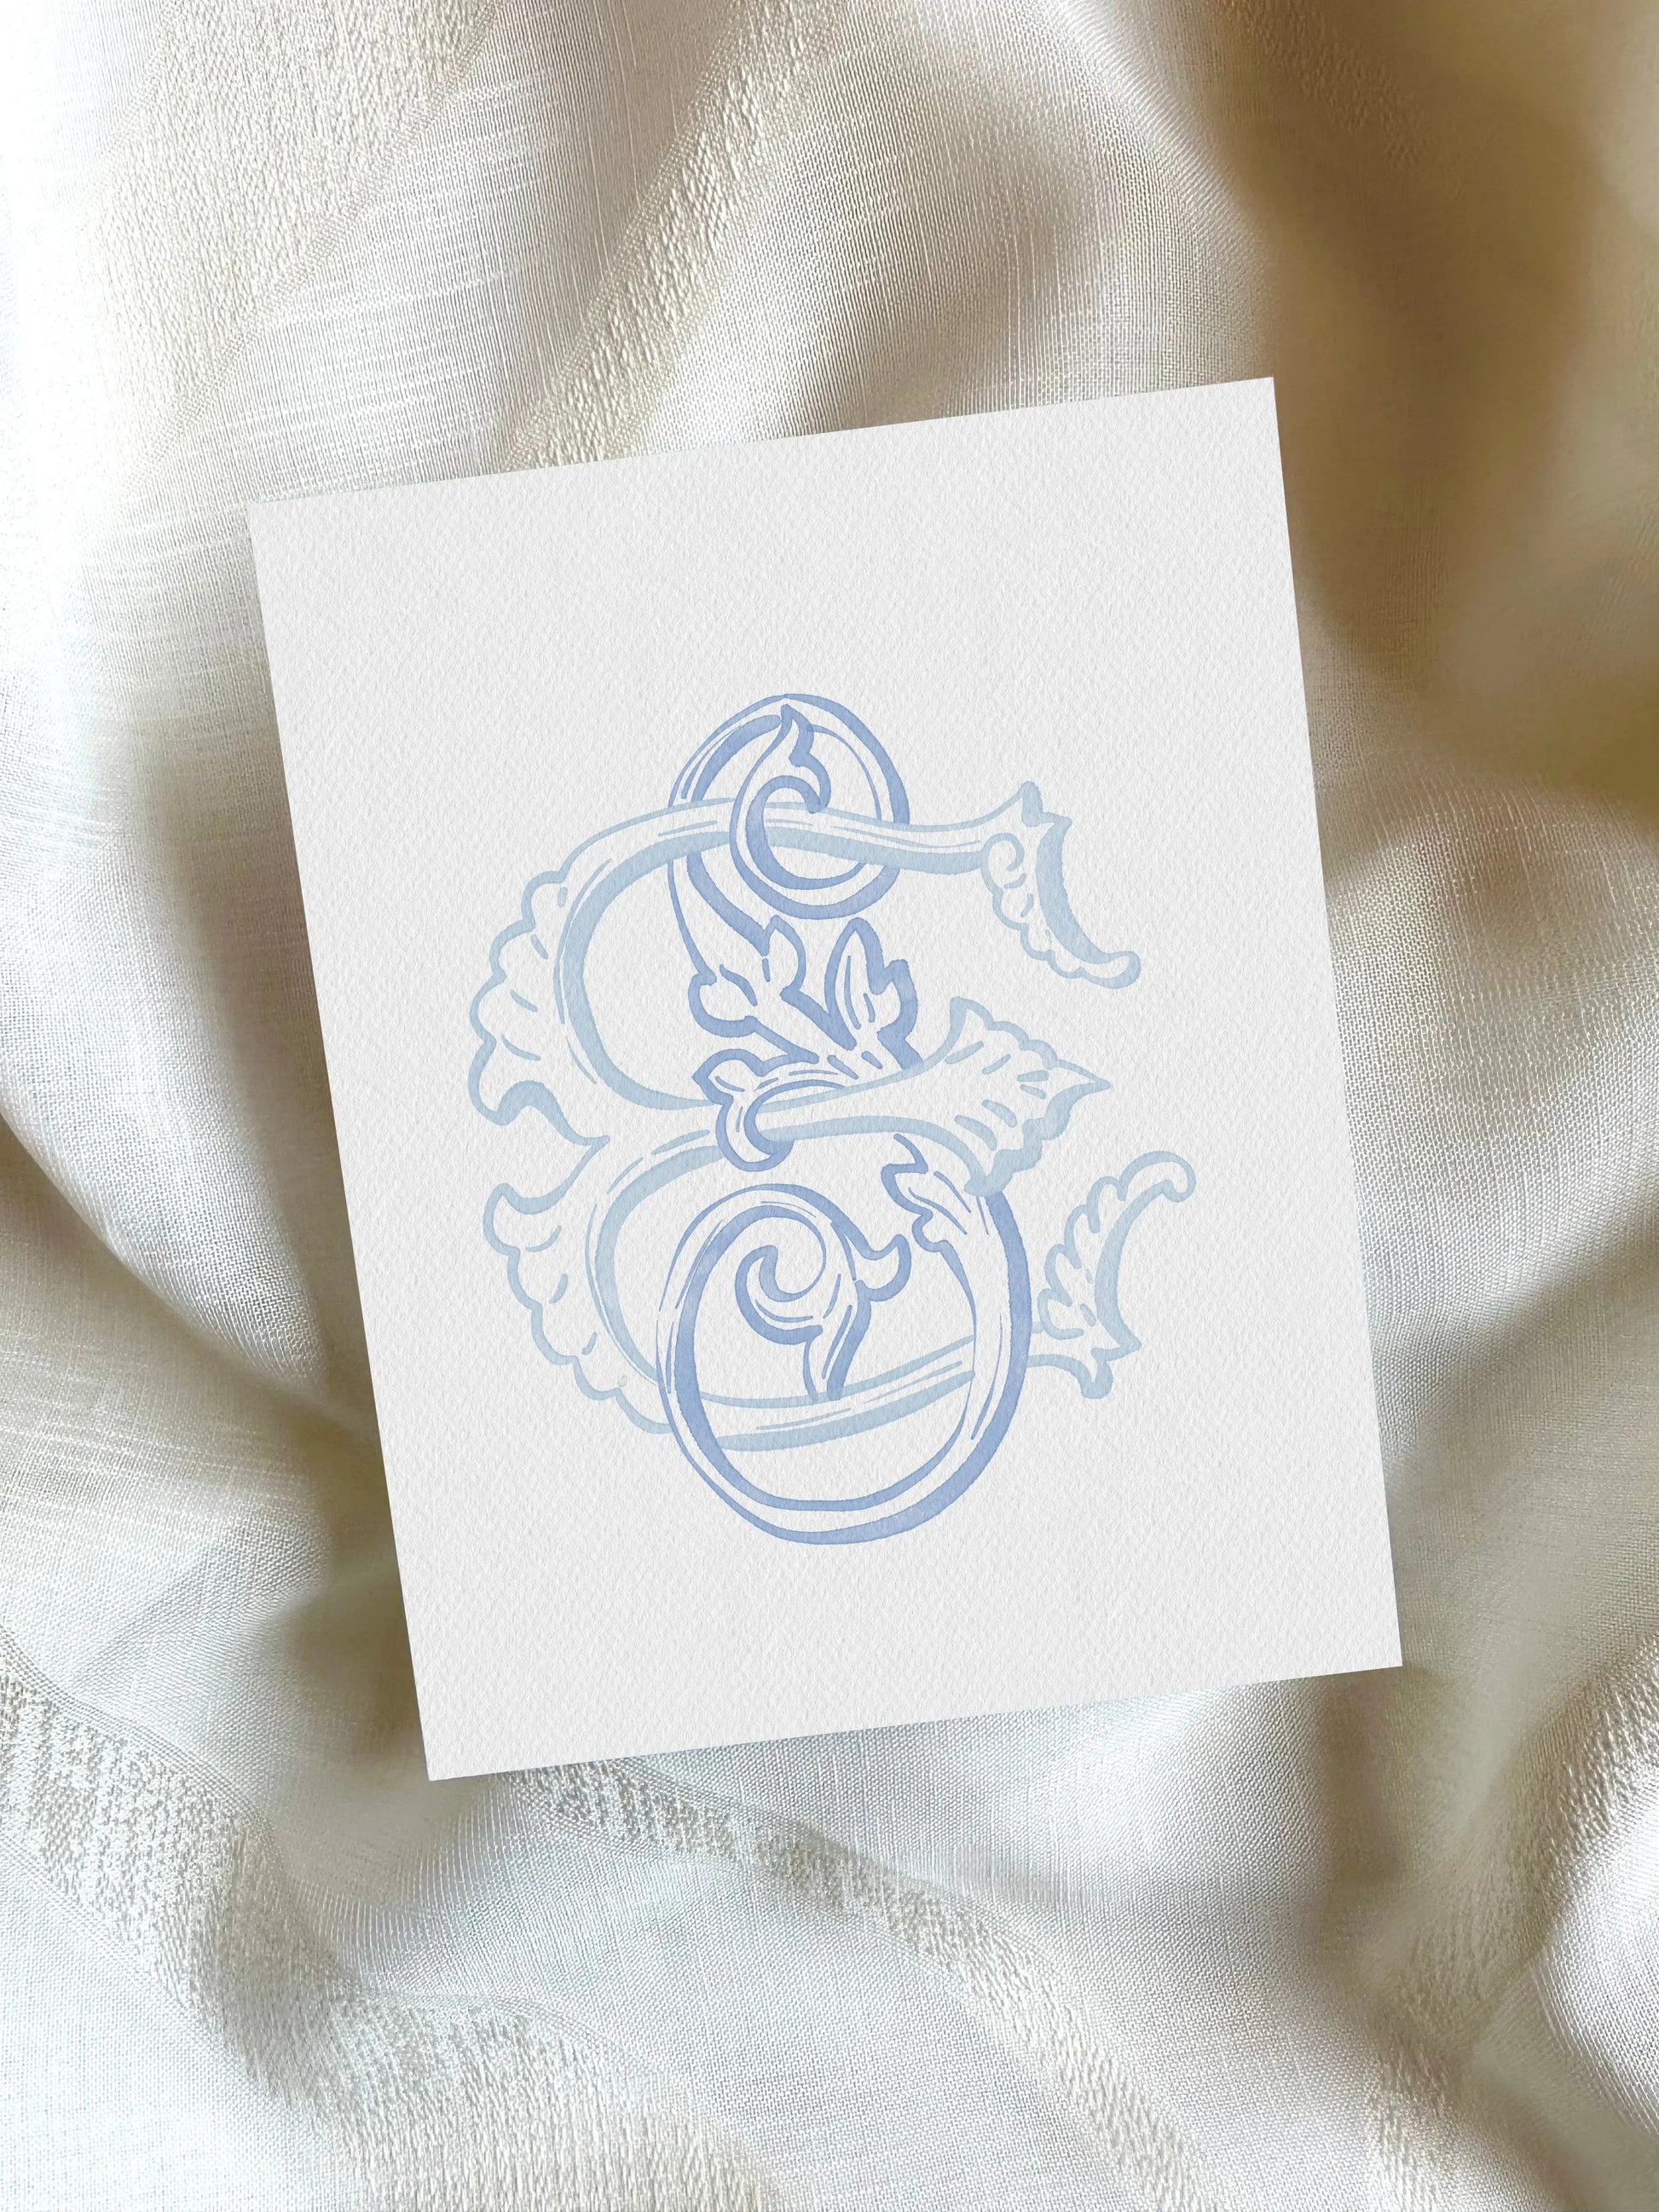 2 Letter Monogram with Letters SE| Digital Download - Wedding Monogram SVG, Personal Logo, Wedding Logo for Wedding Invitations The Wedding Crest Lab